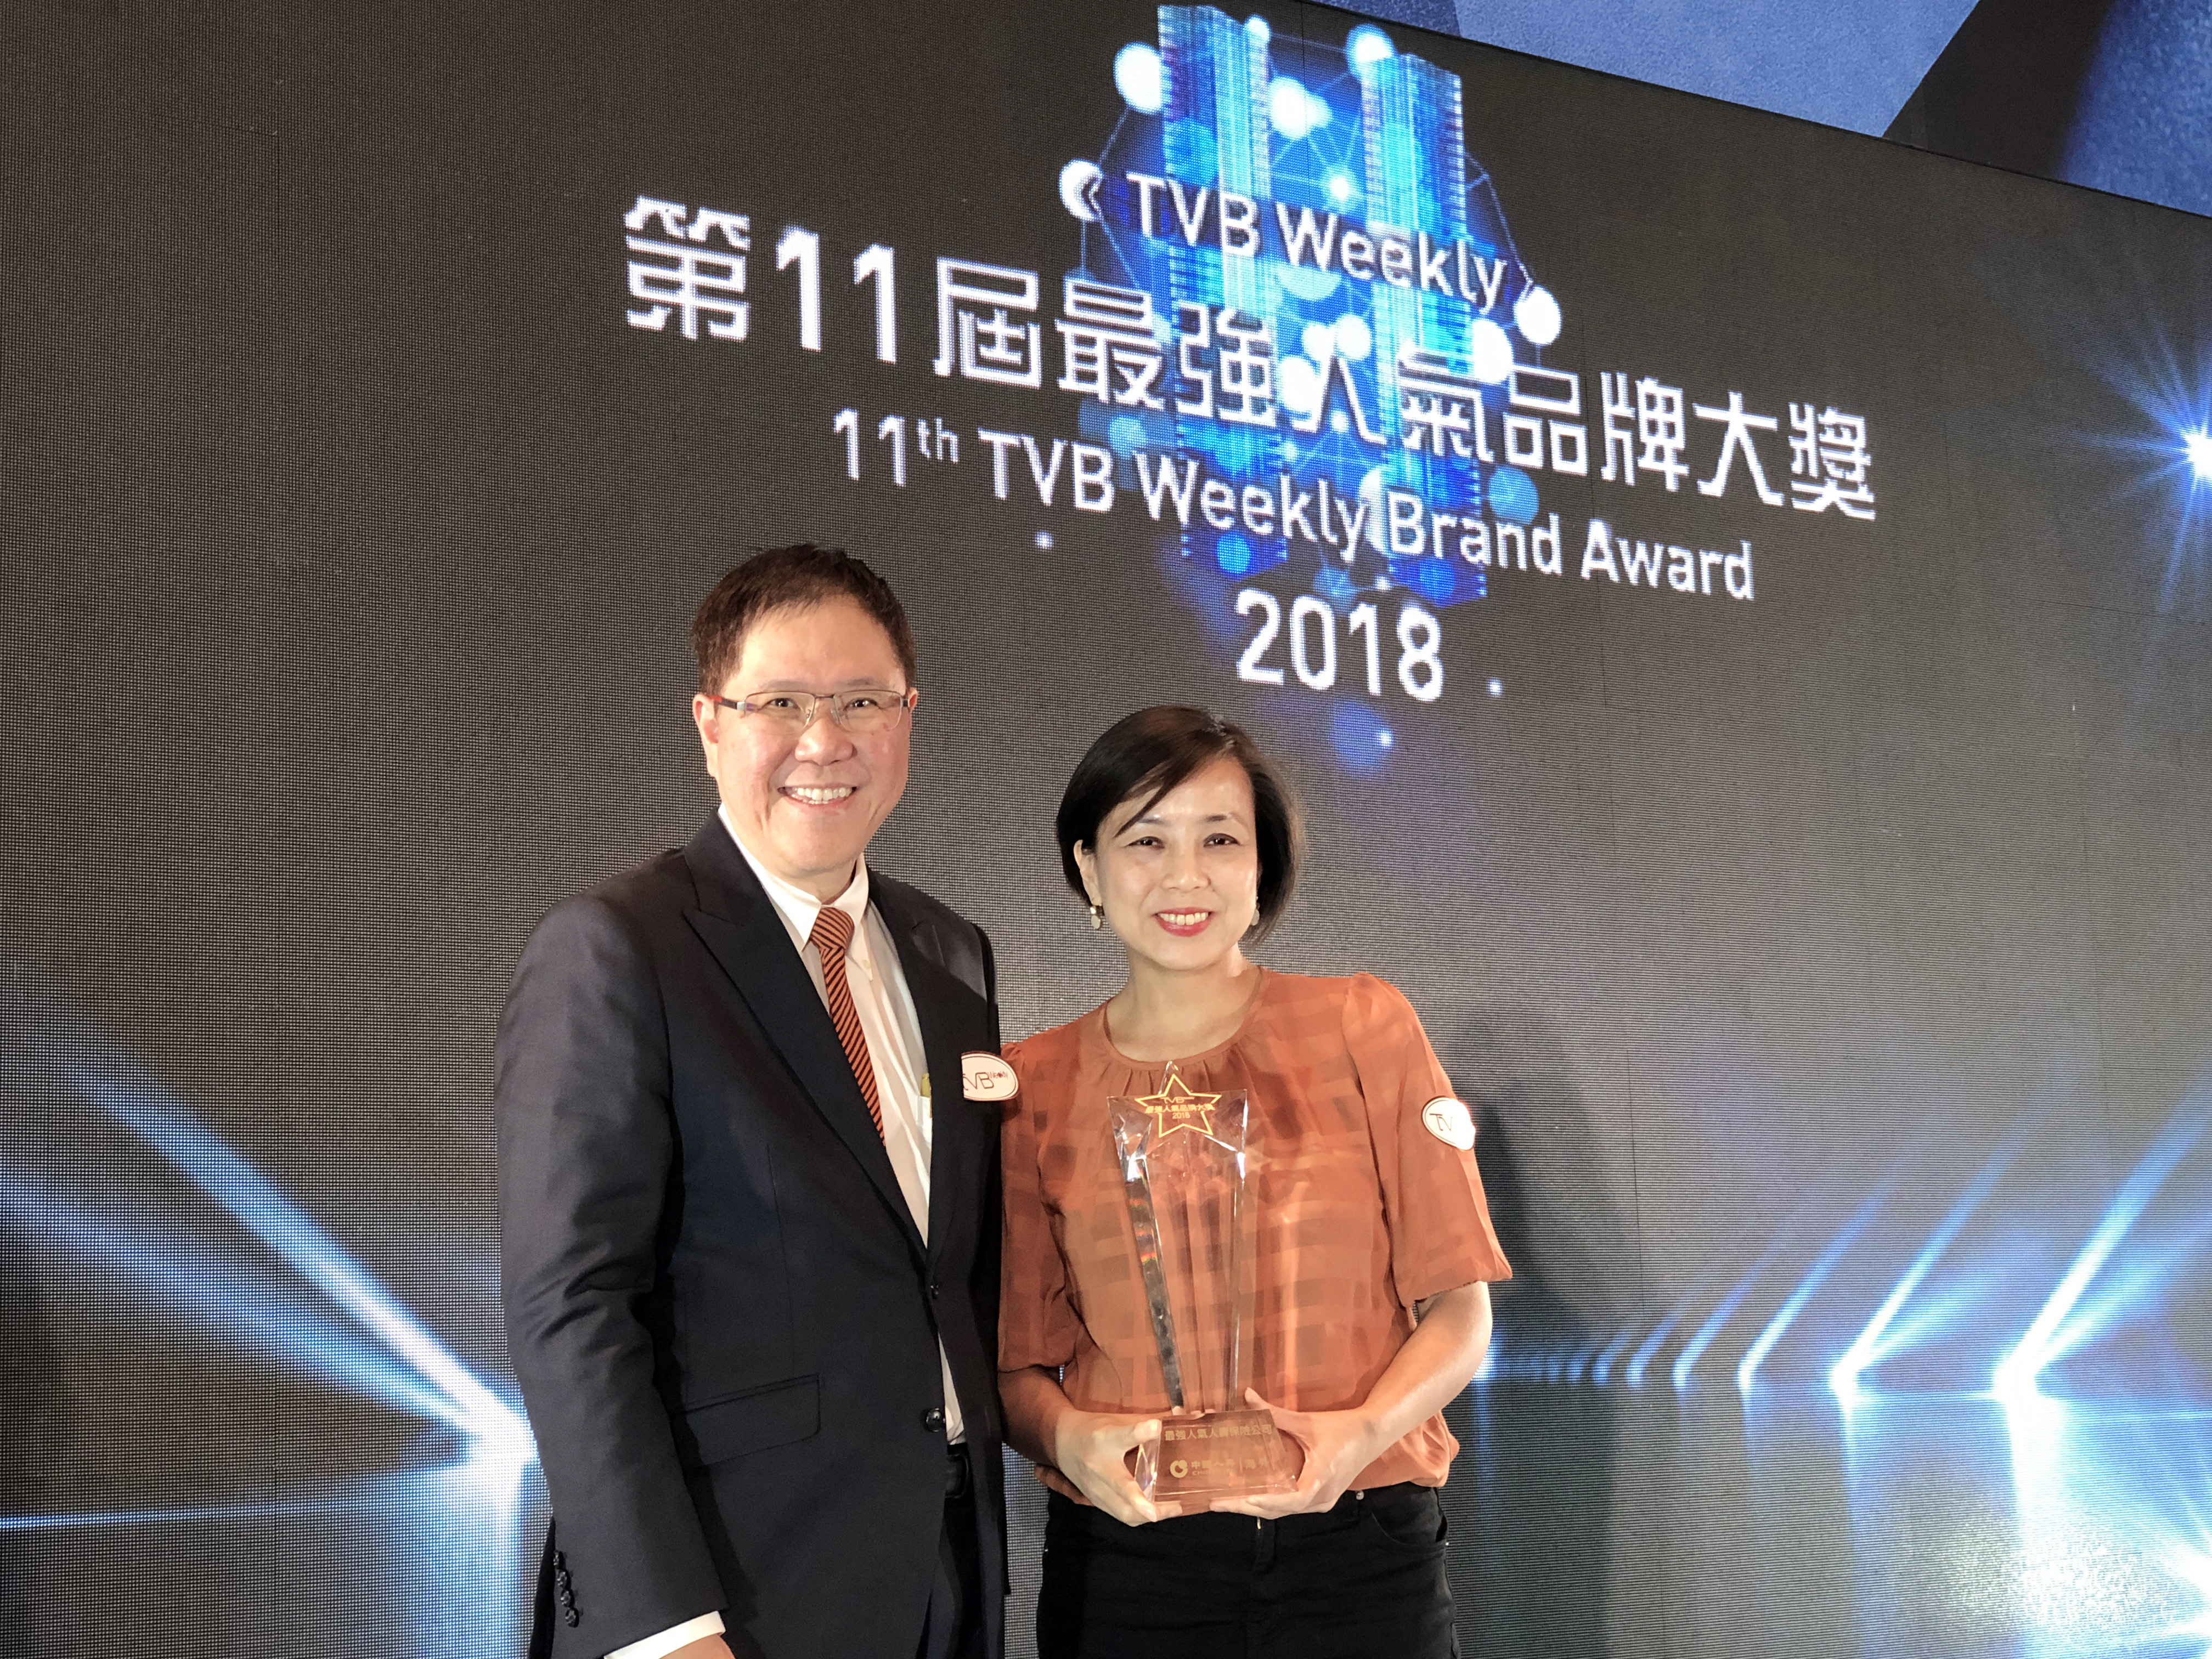 China Life (Overseas) awarded “2018 TVB Weekly Brand Award – Life Insurance Company” for four years in a row